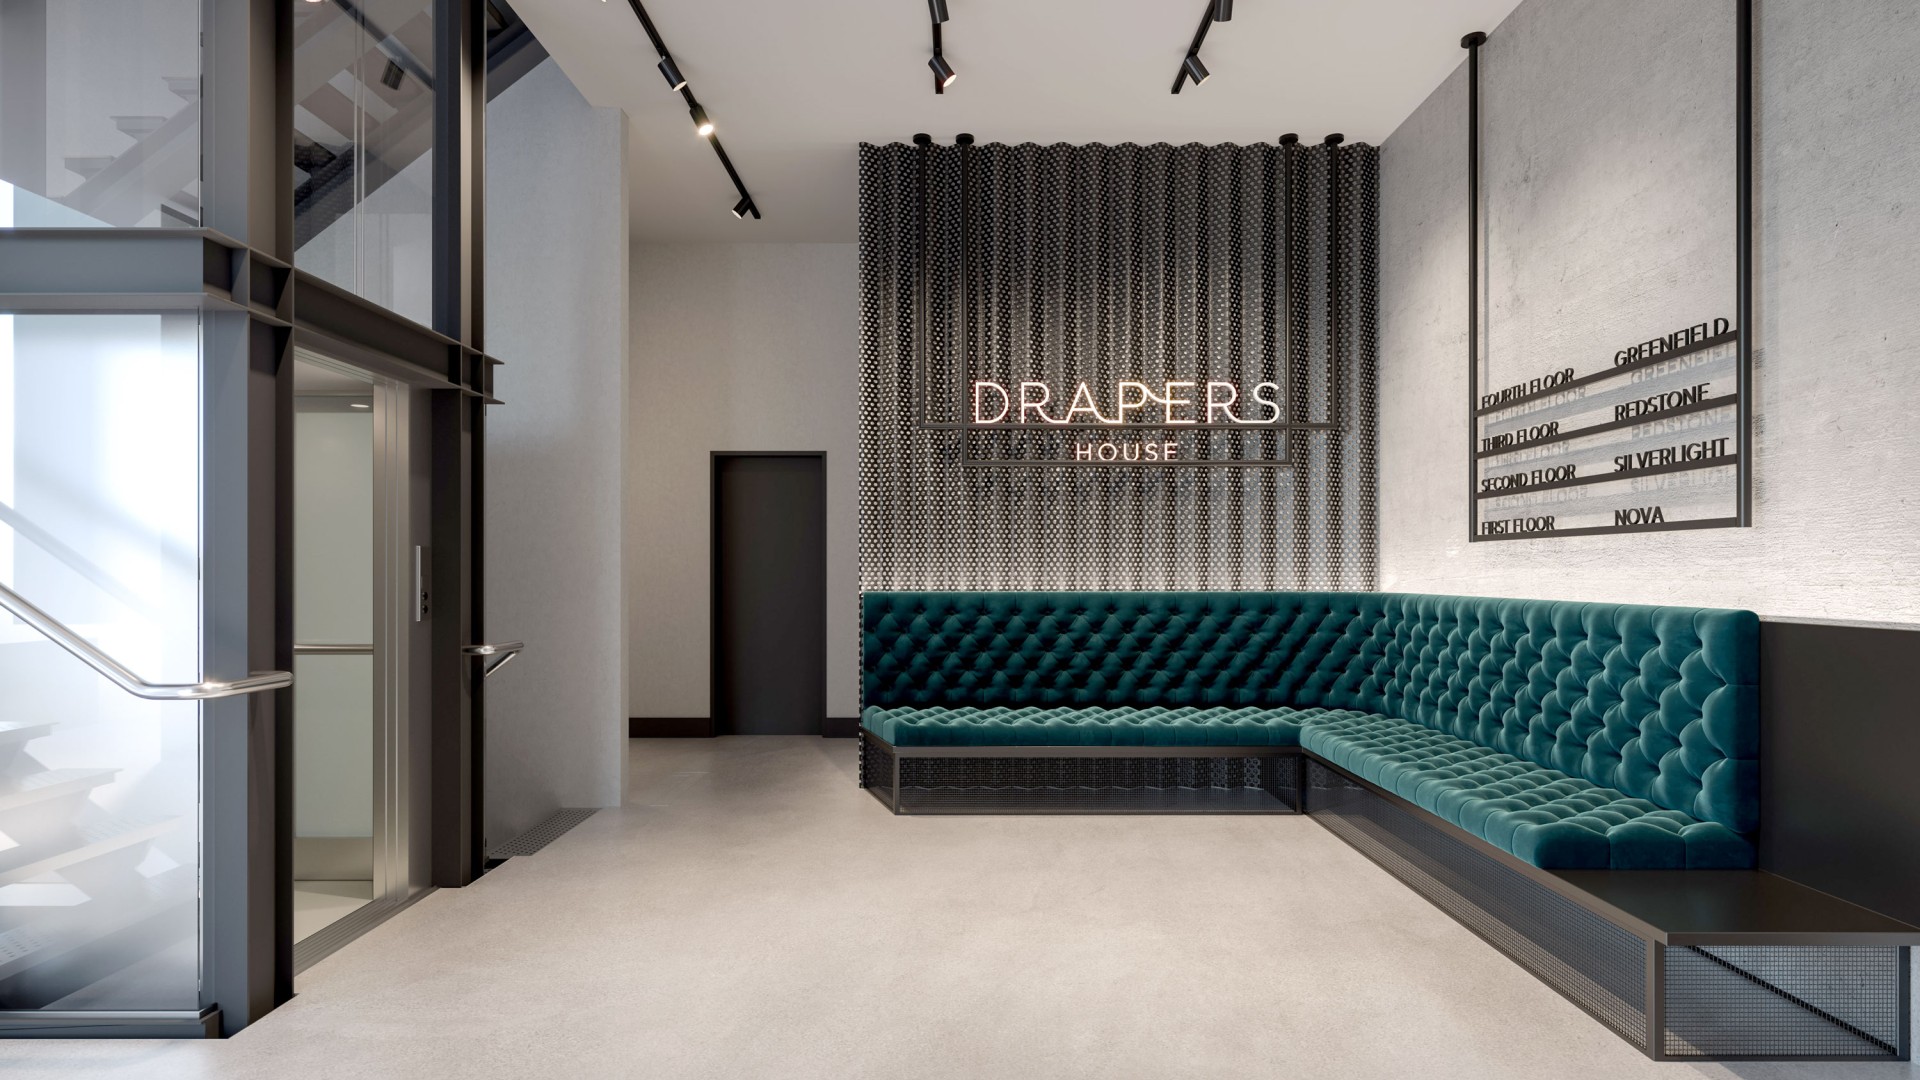 Drapers House, London